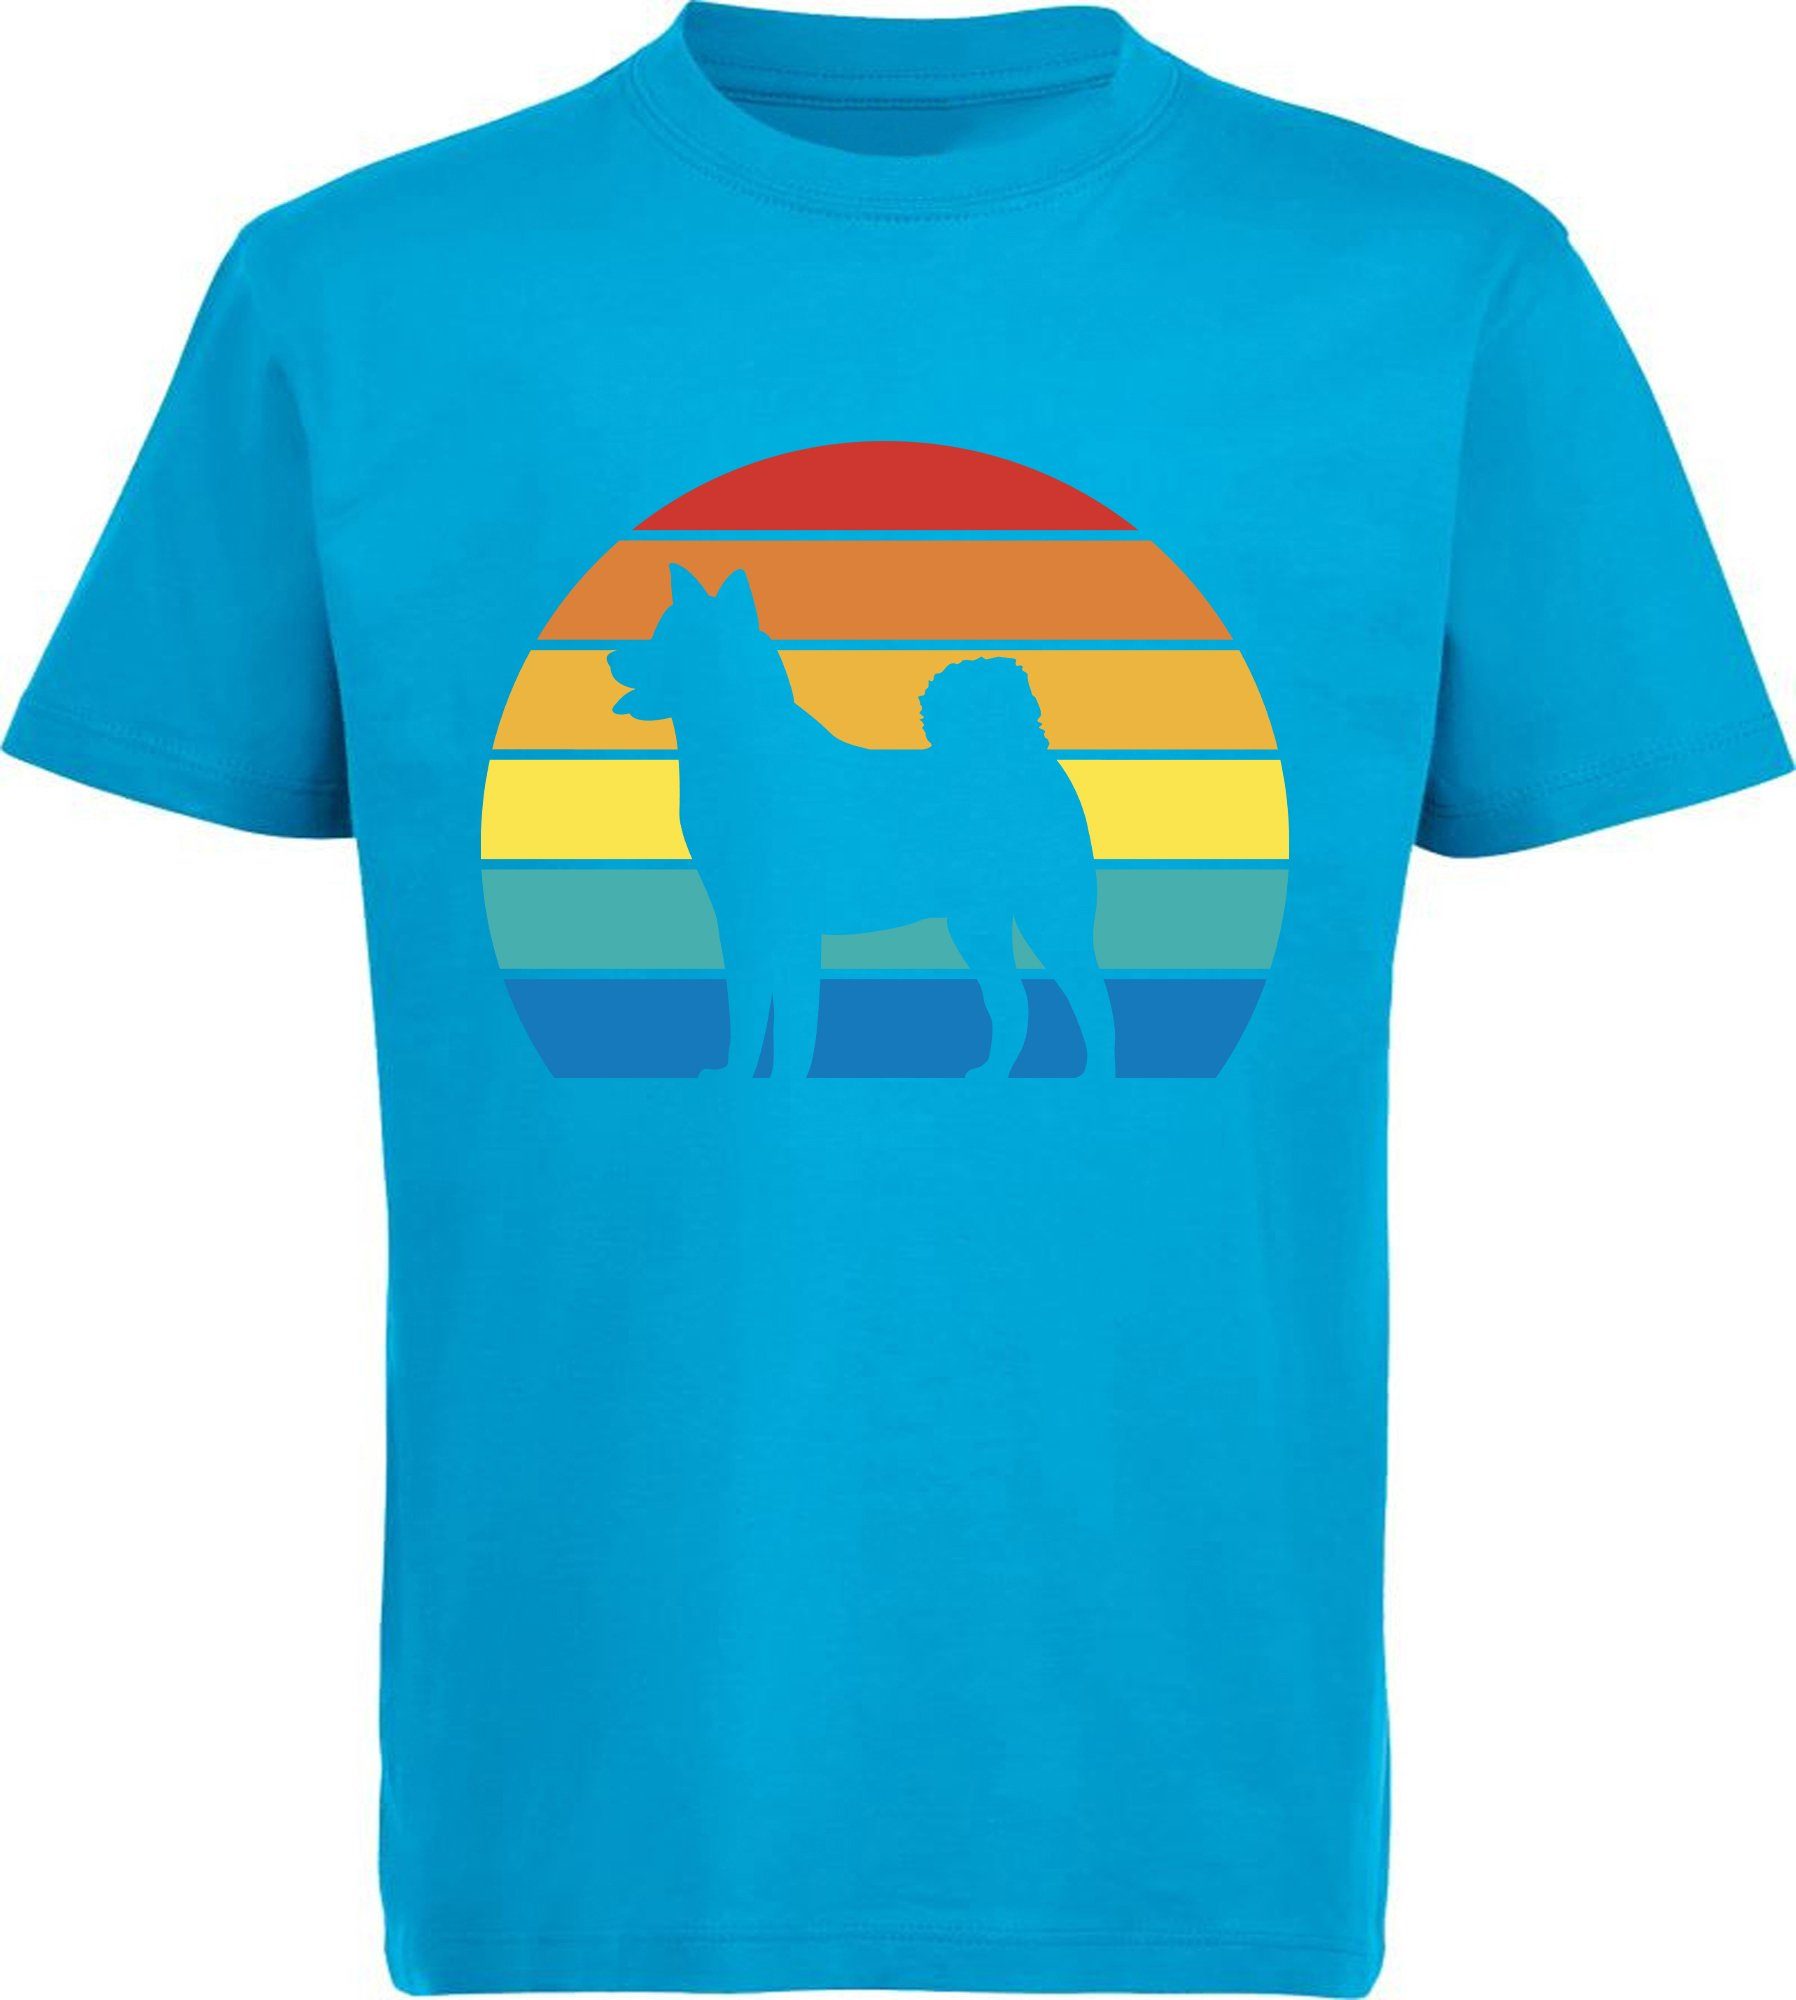 Print-Shirt Hunde Akita Aufdruck, Bild T-Shirt aqua MyDesign24 blau mit i236 bedruckt Retro Baumwollshirt Kinder -